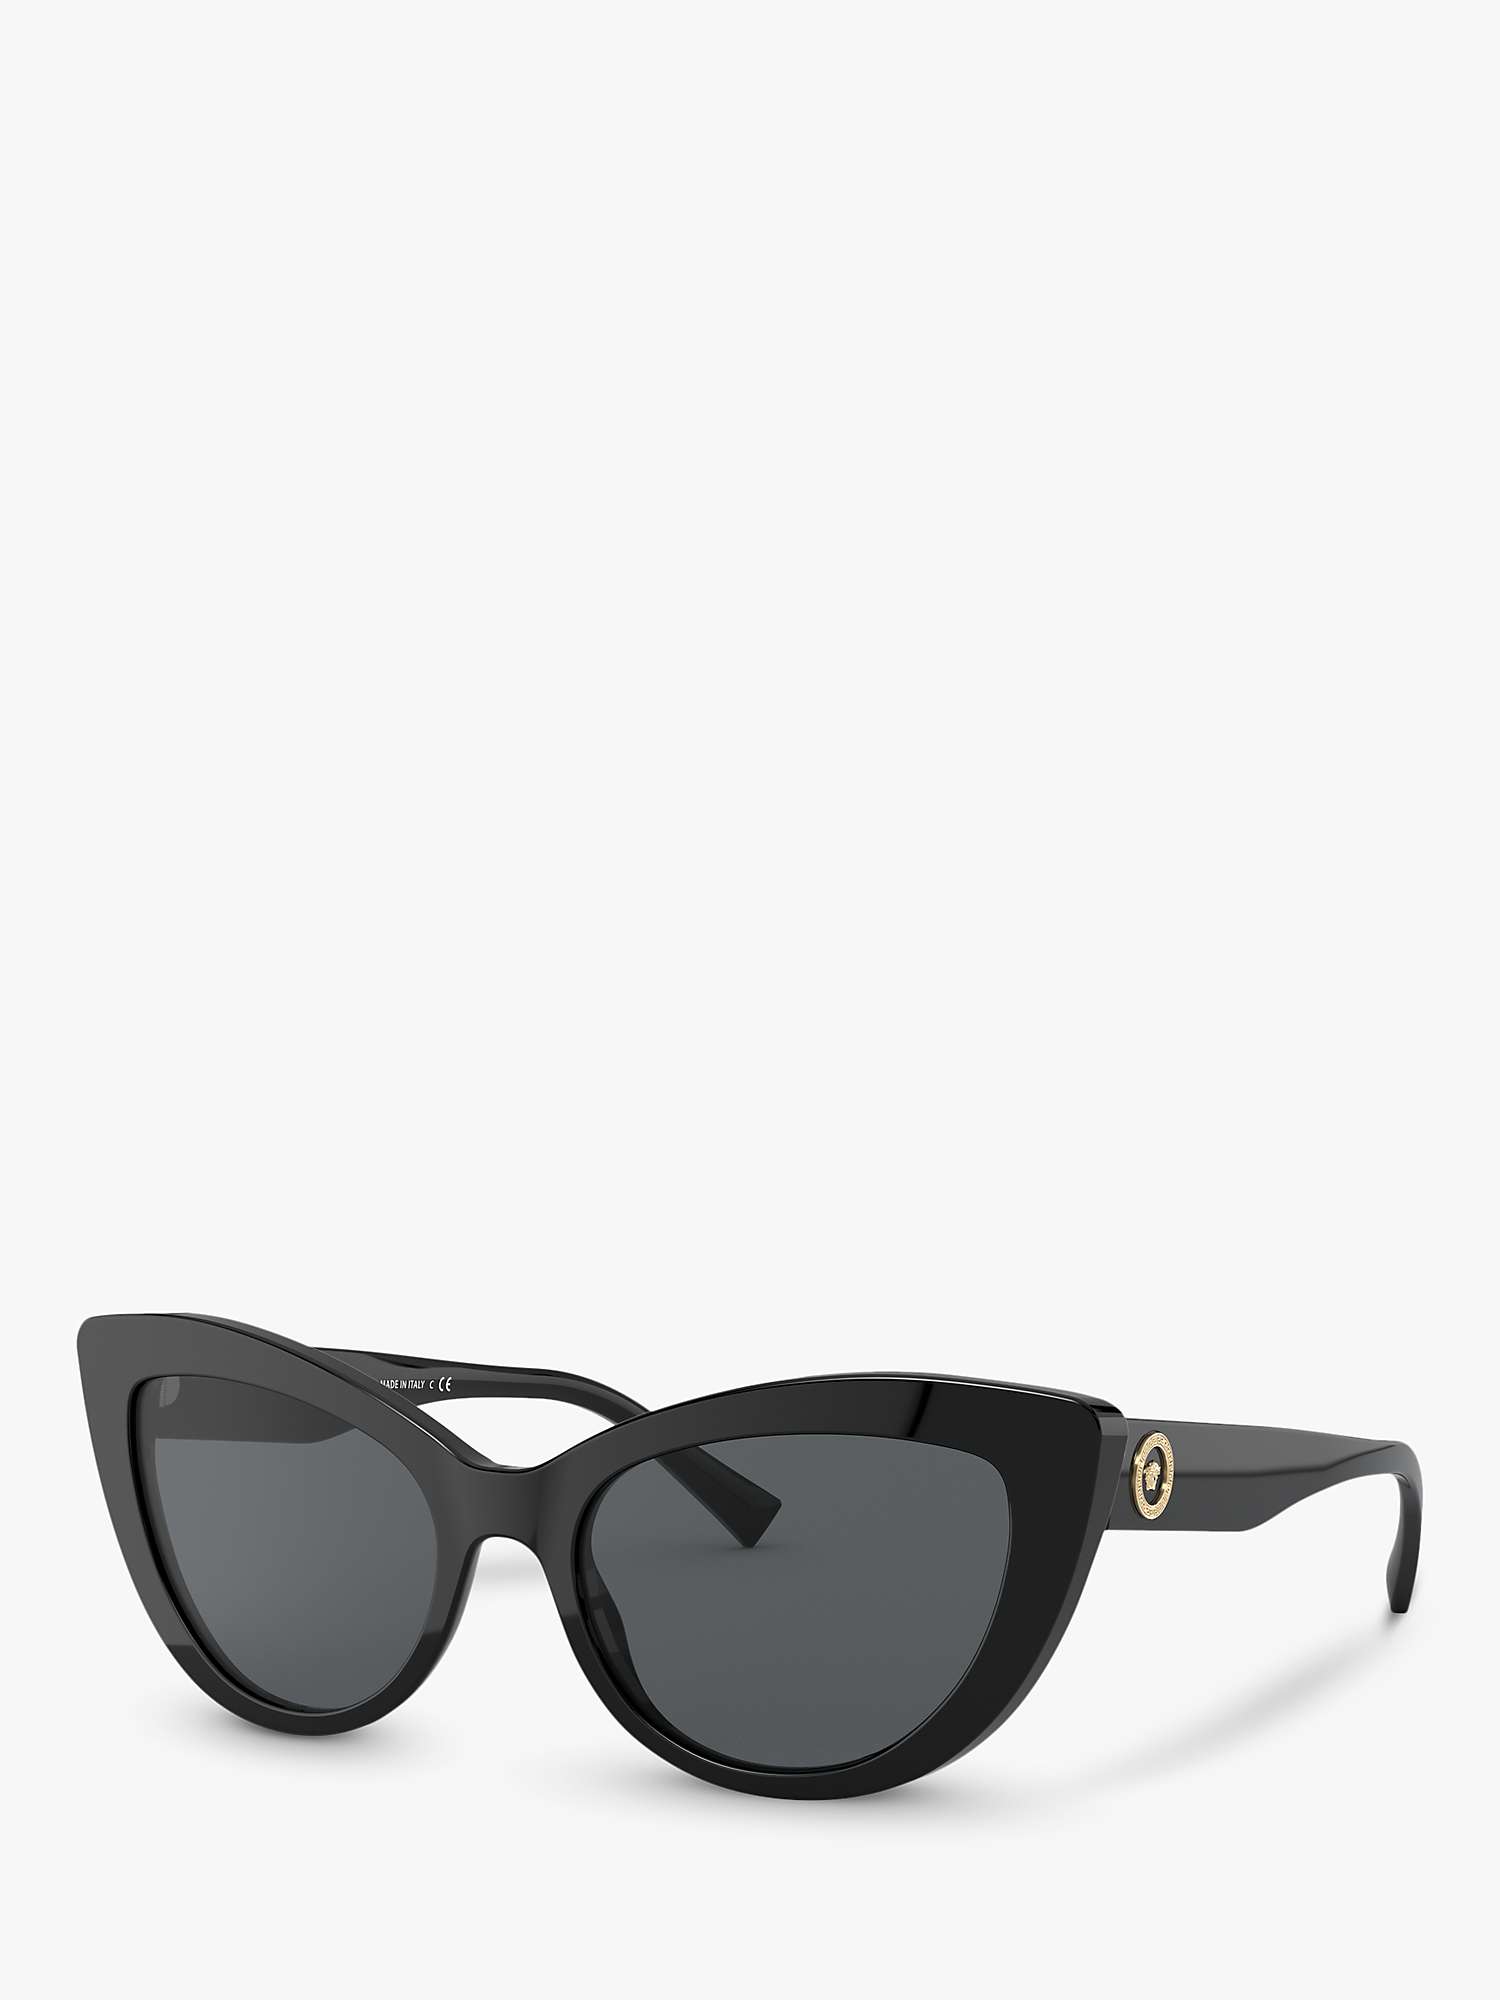 Buy Versace VE4388 Women's Cat Eye Sunglasses, Black/Grey Online at johnlewis.com